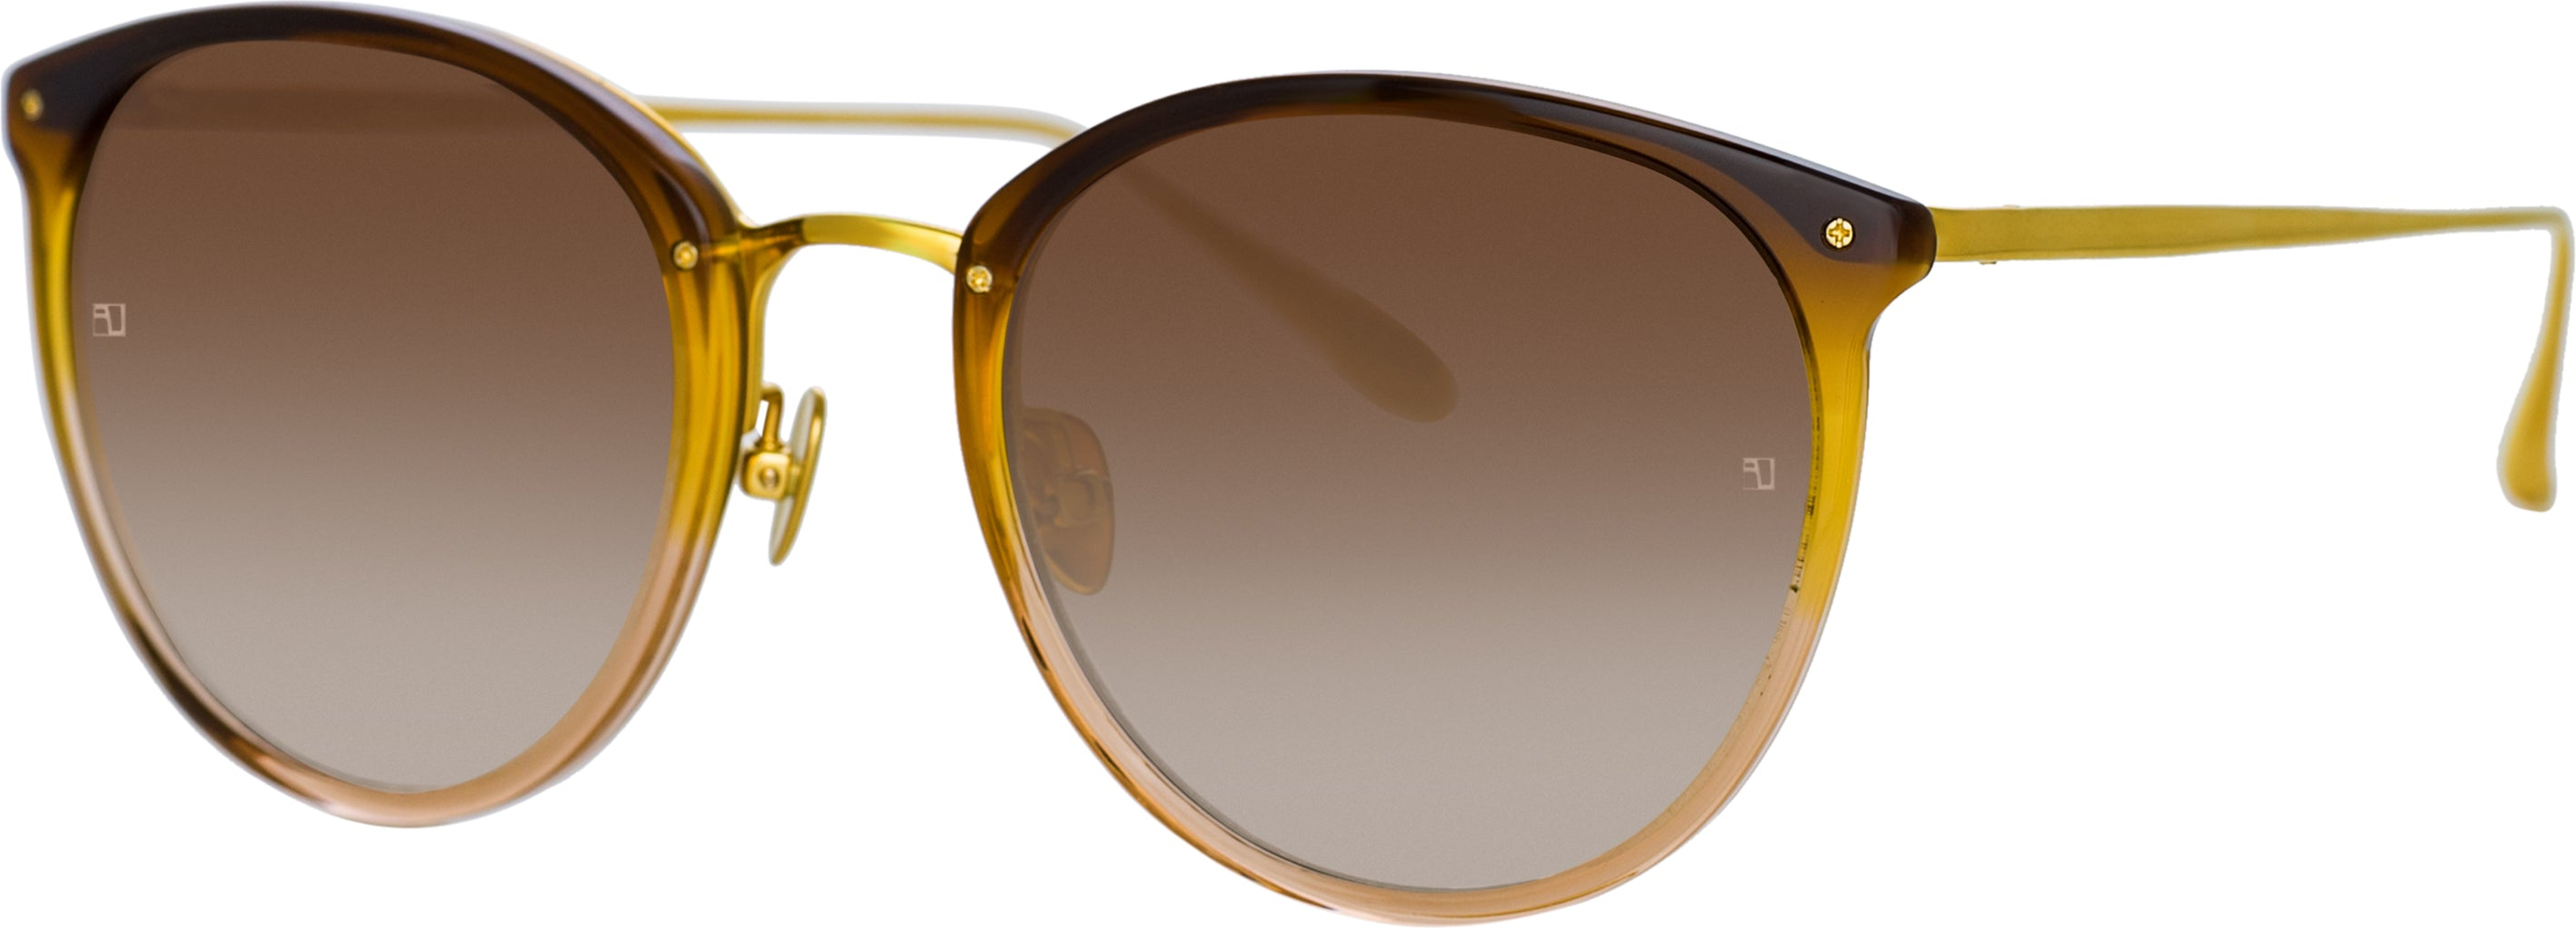 Color_LFL251C81SUN - Calthorpe Oval Sunglasses in Brown Gradient